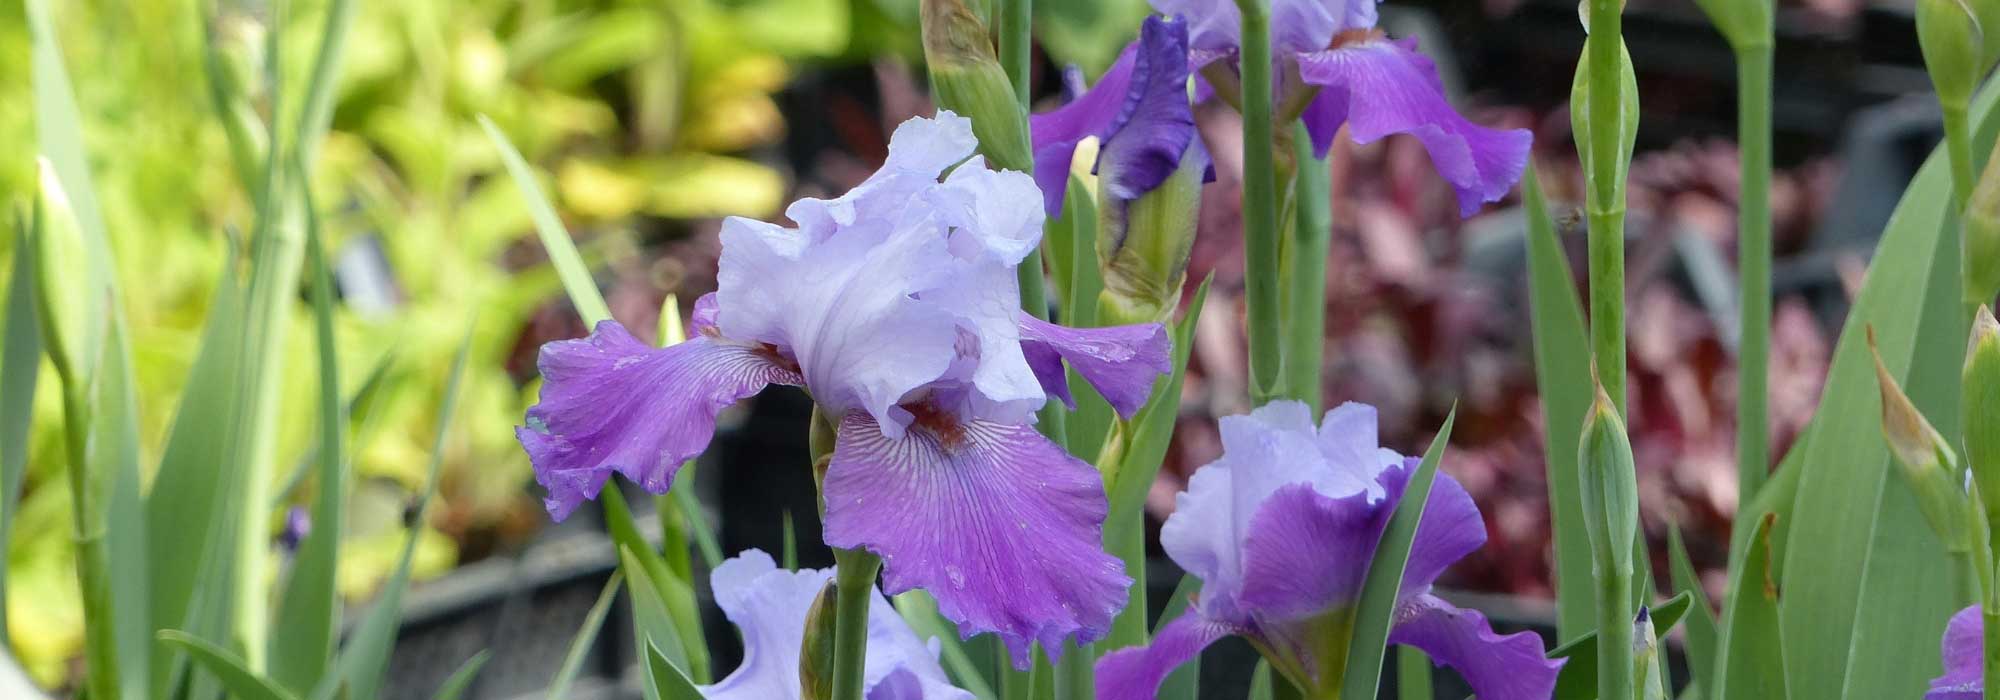 Iris des jardins, iris barbus : plantation, entretien